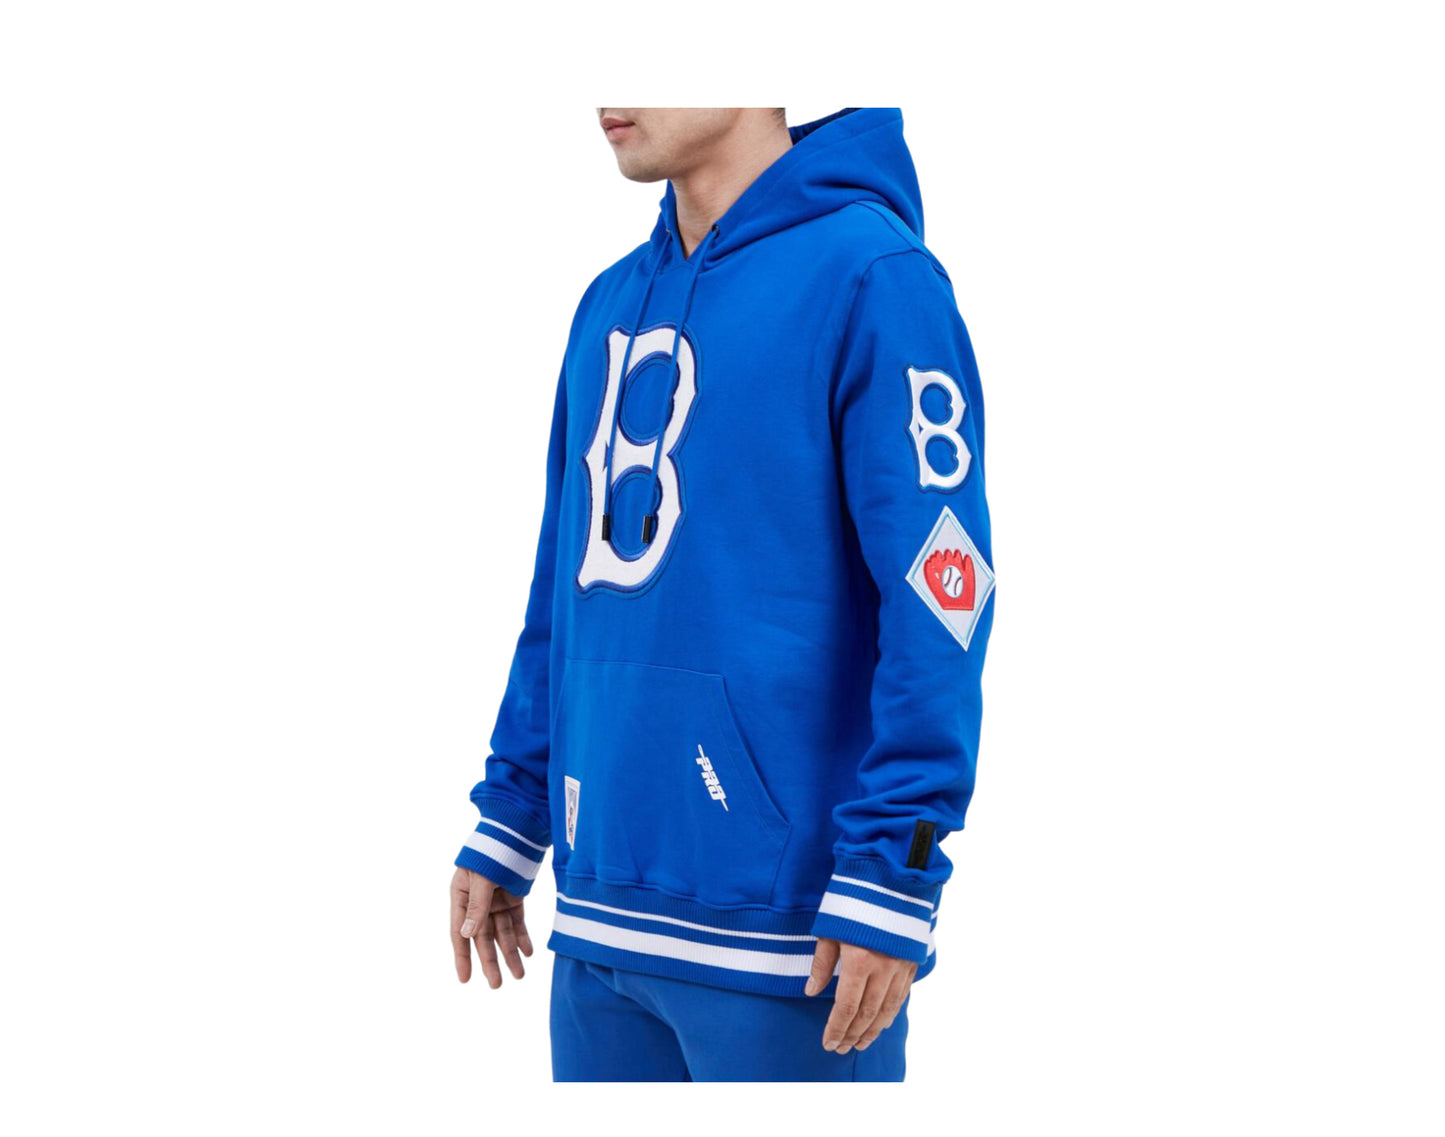 Red MLB Brooklyn Dodgers sports jumper, sweater men's branded